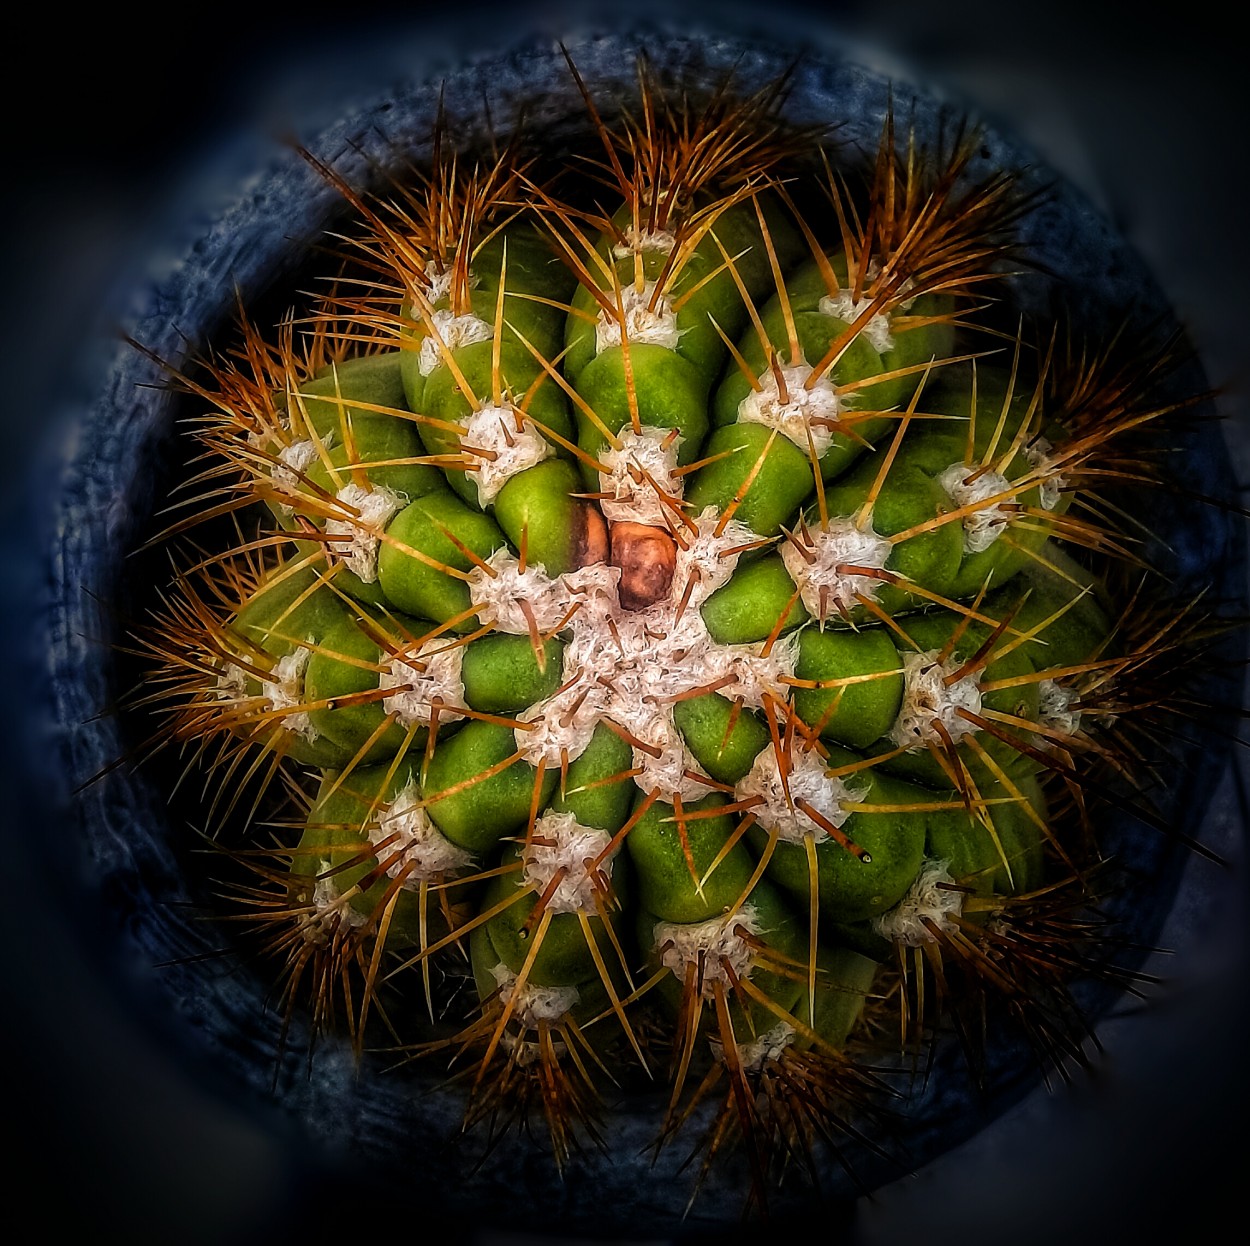 "Cactus" de Roberto Guillermo Hagemann